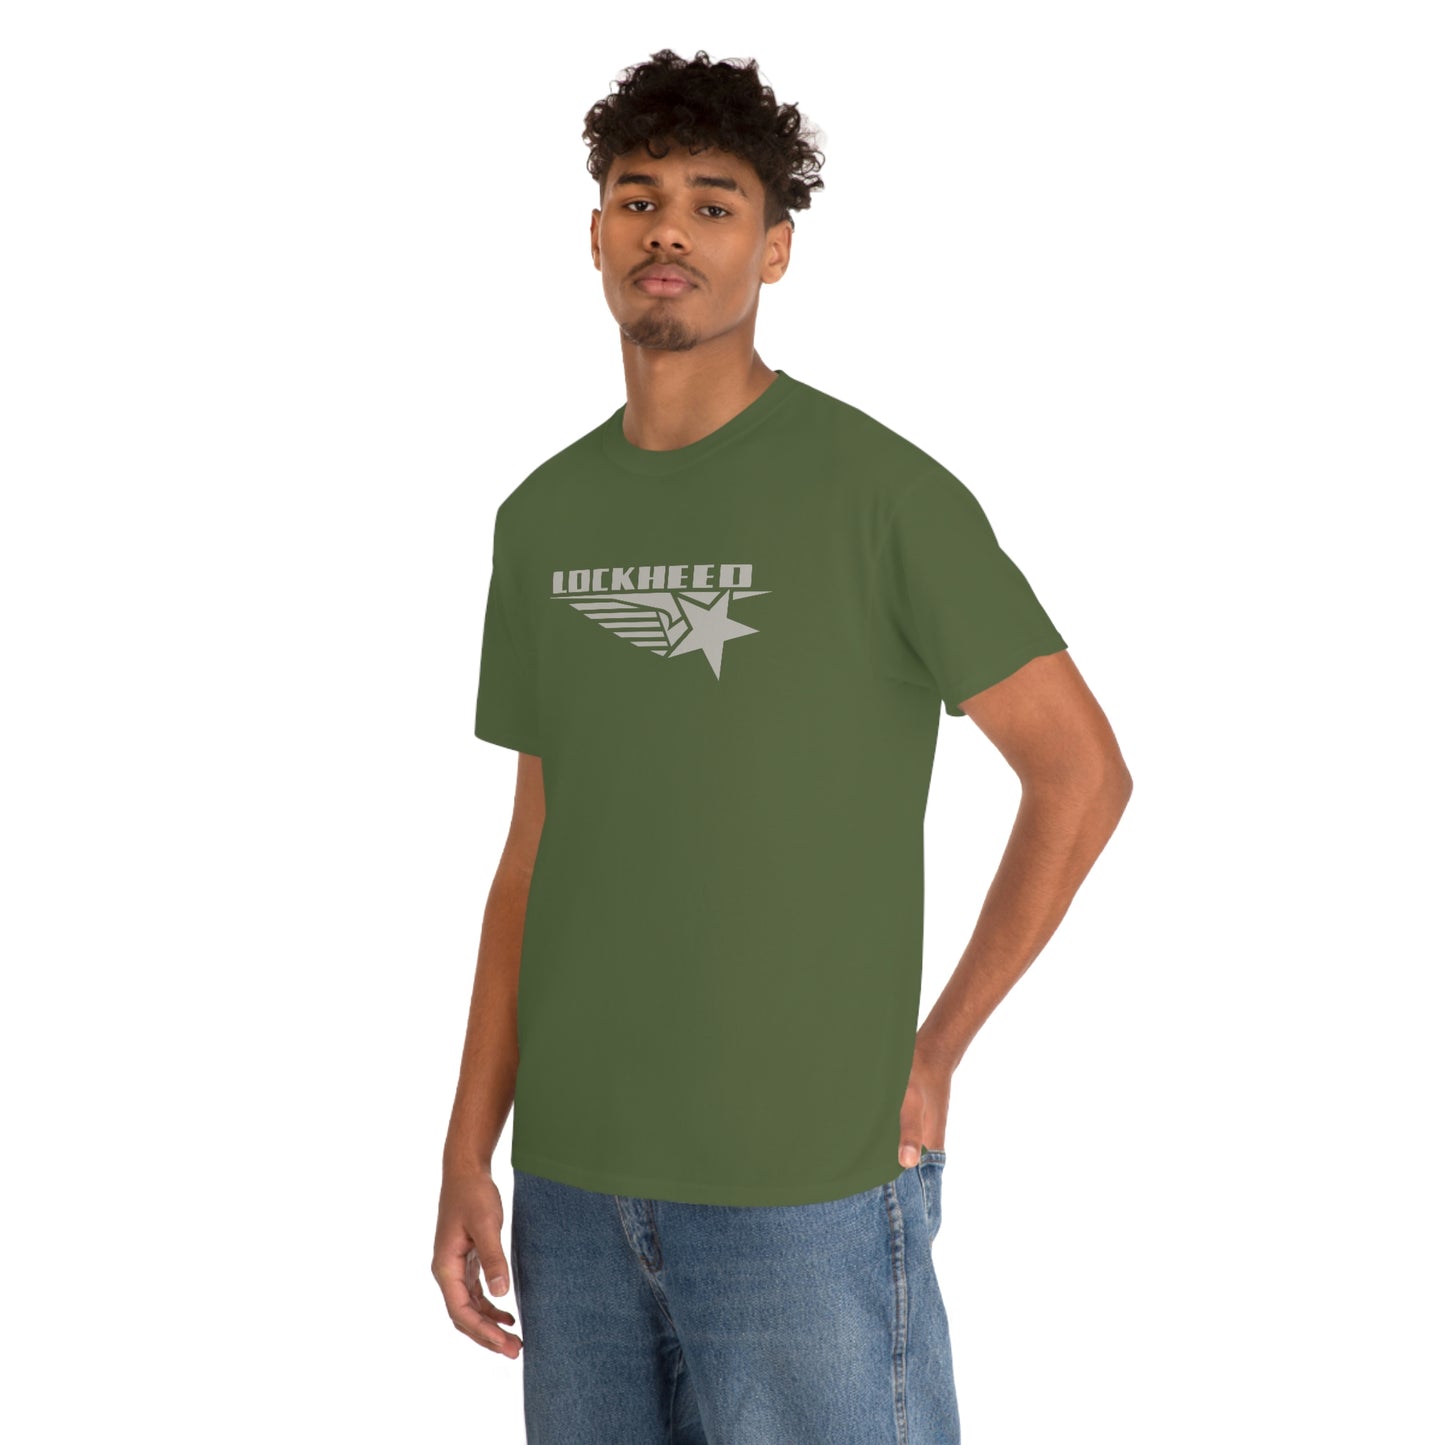 Lockheed T-Shirt